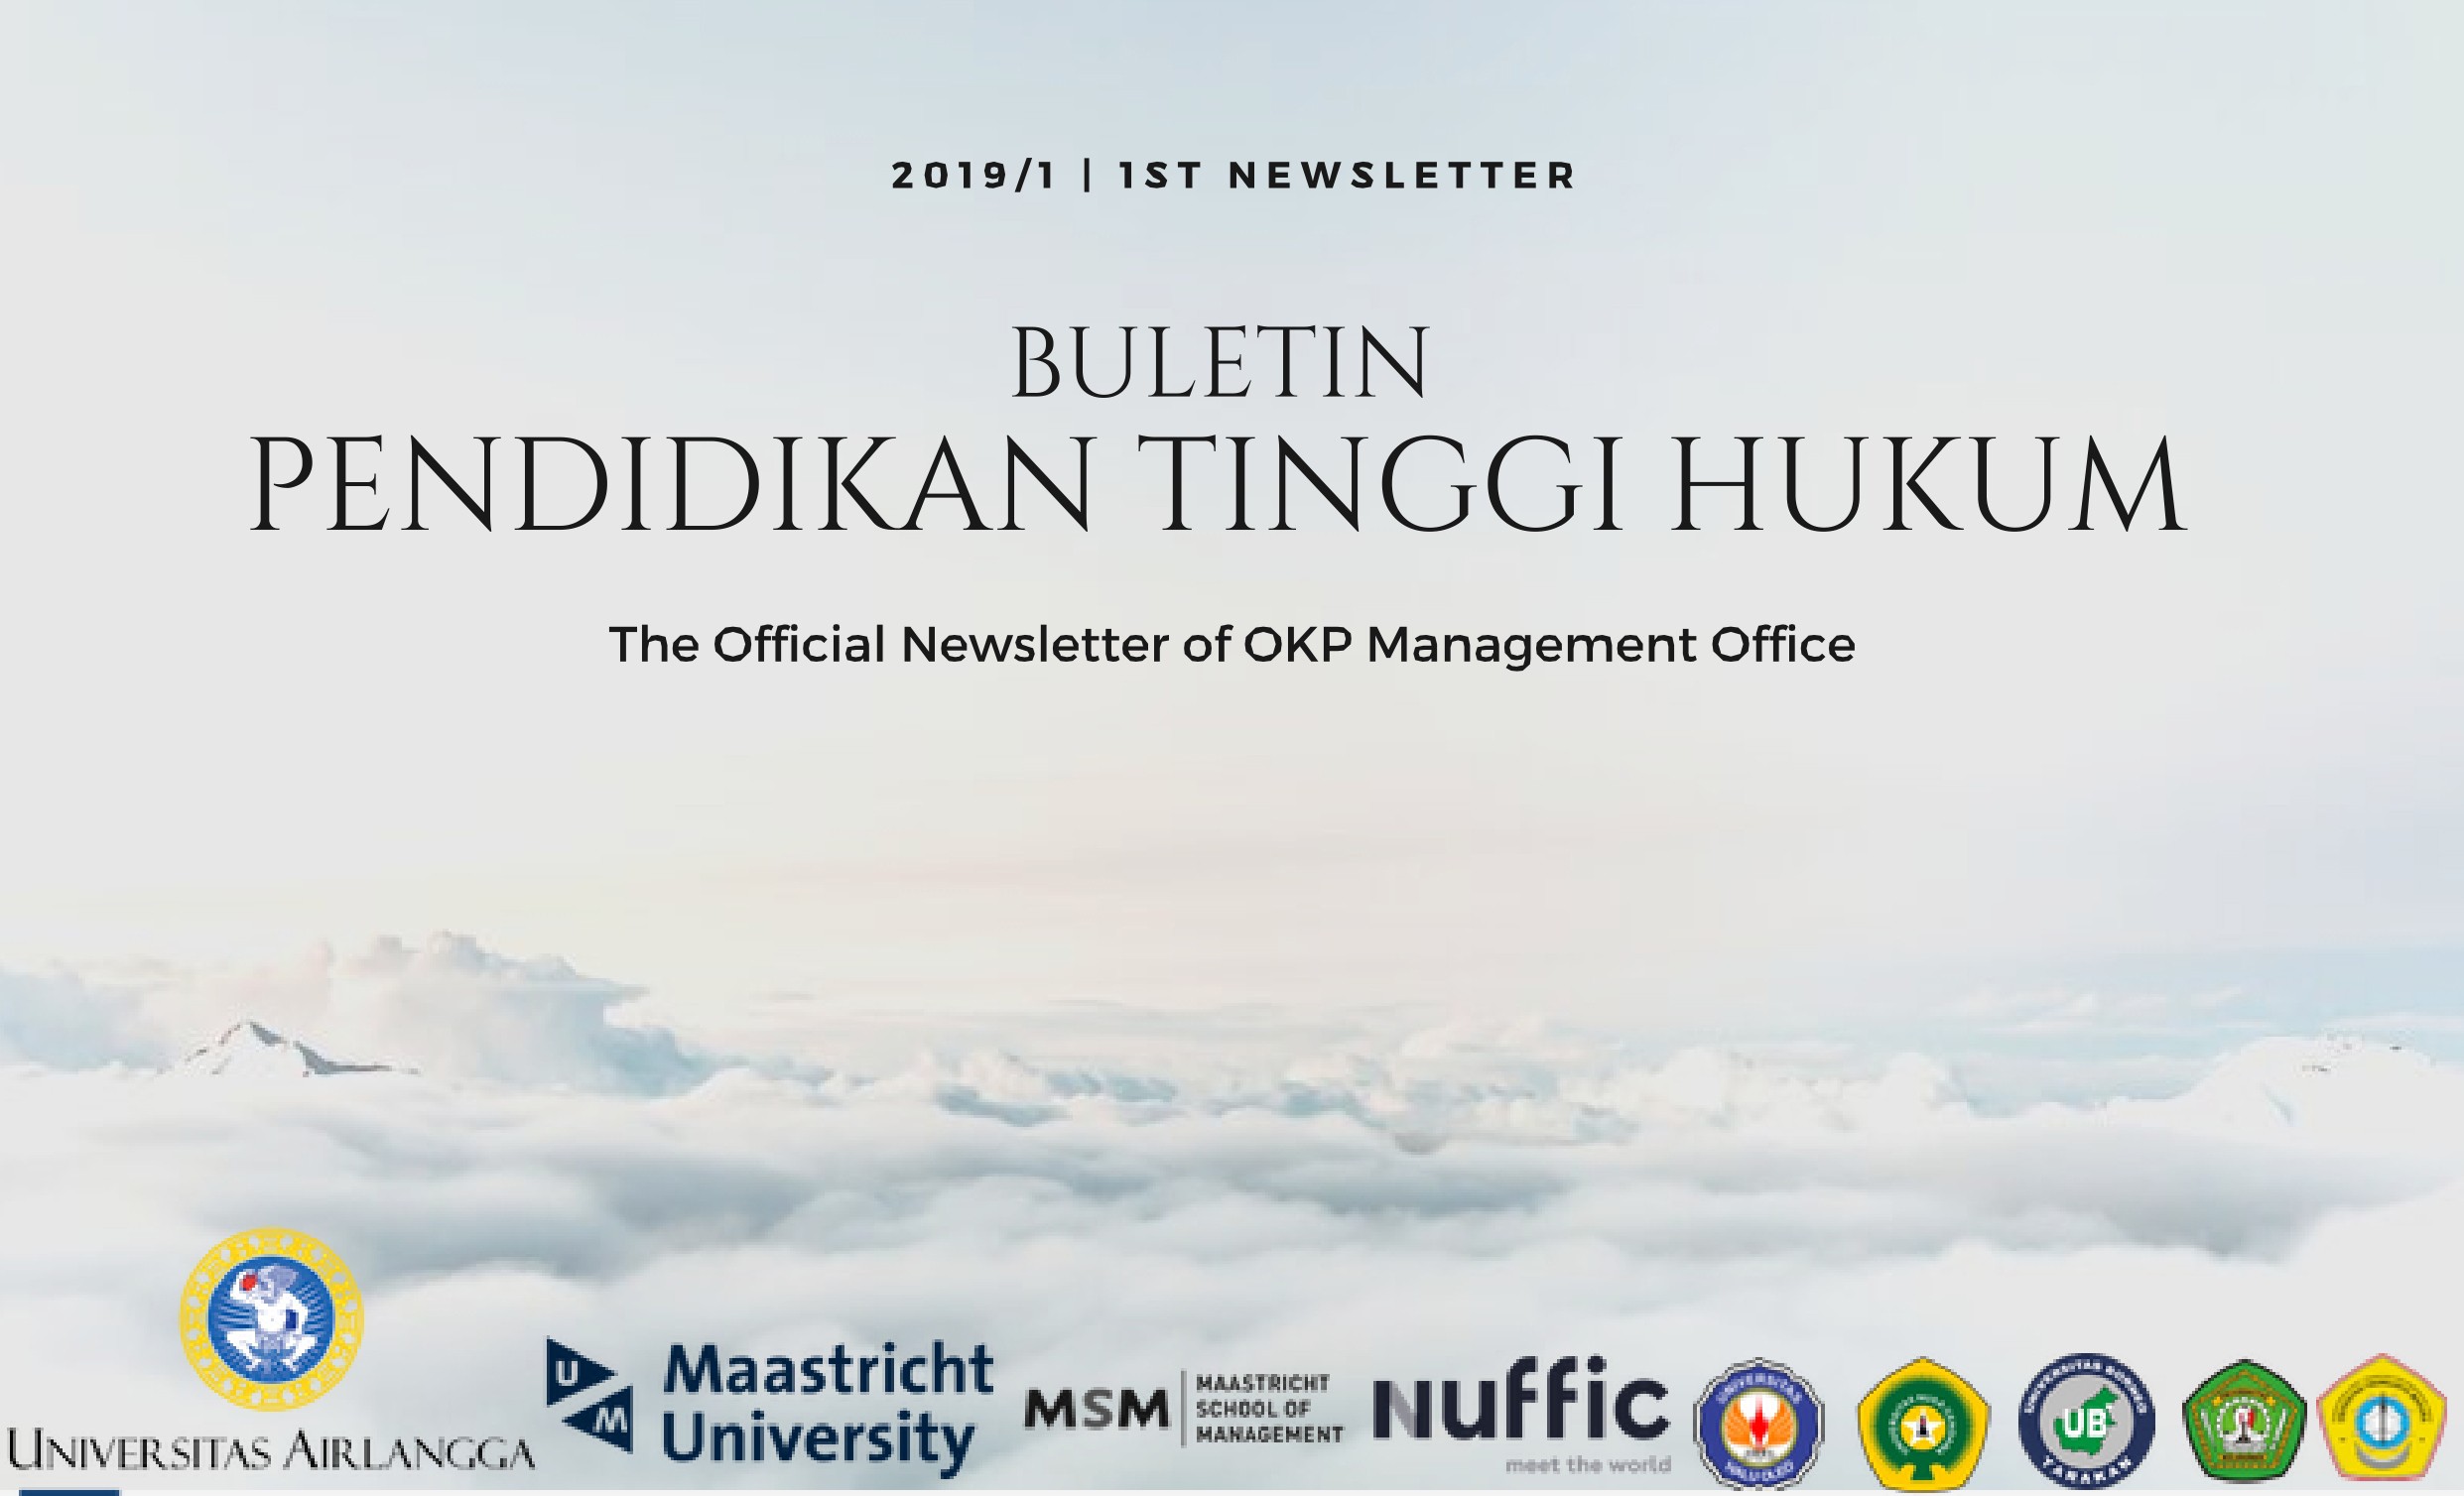 1st NEWSLETTER, BULETIN PENDIDIKAN TINGGI HUKUM, The Official Newsletter of OKP Management Office